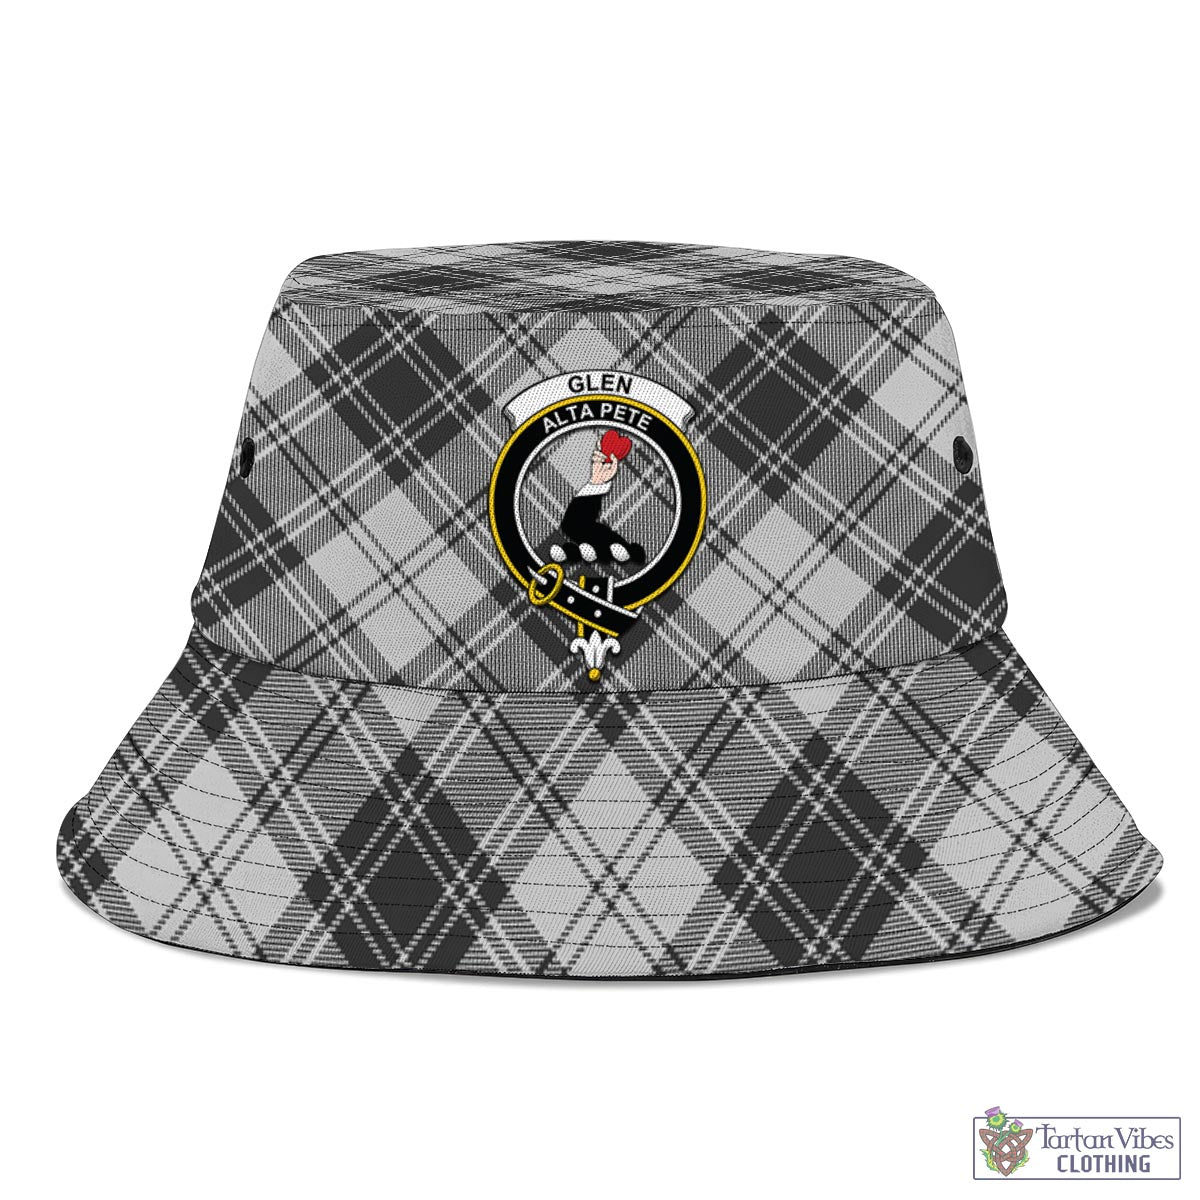 Tartan Vibes Clothing Glen Tartan Bucket Hat with Family Crest